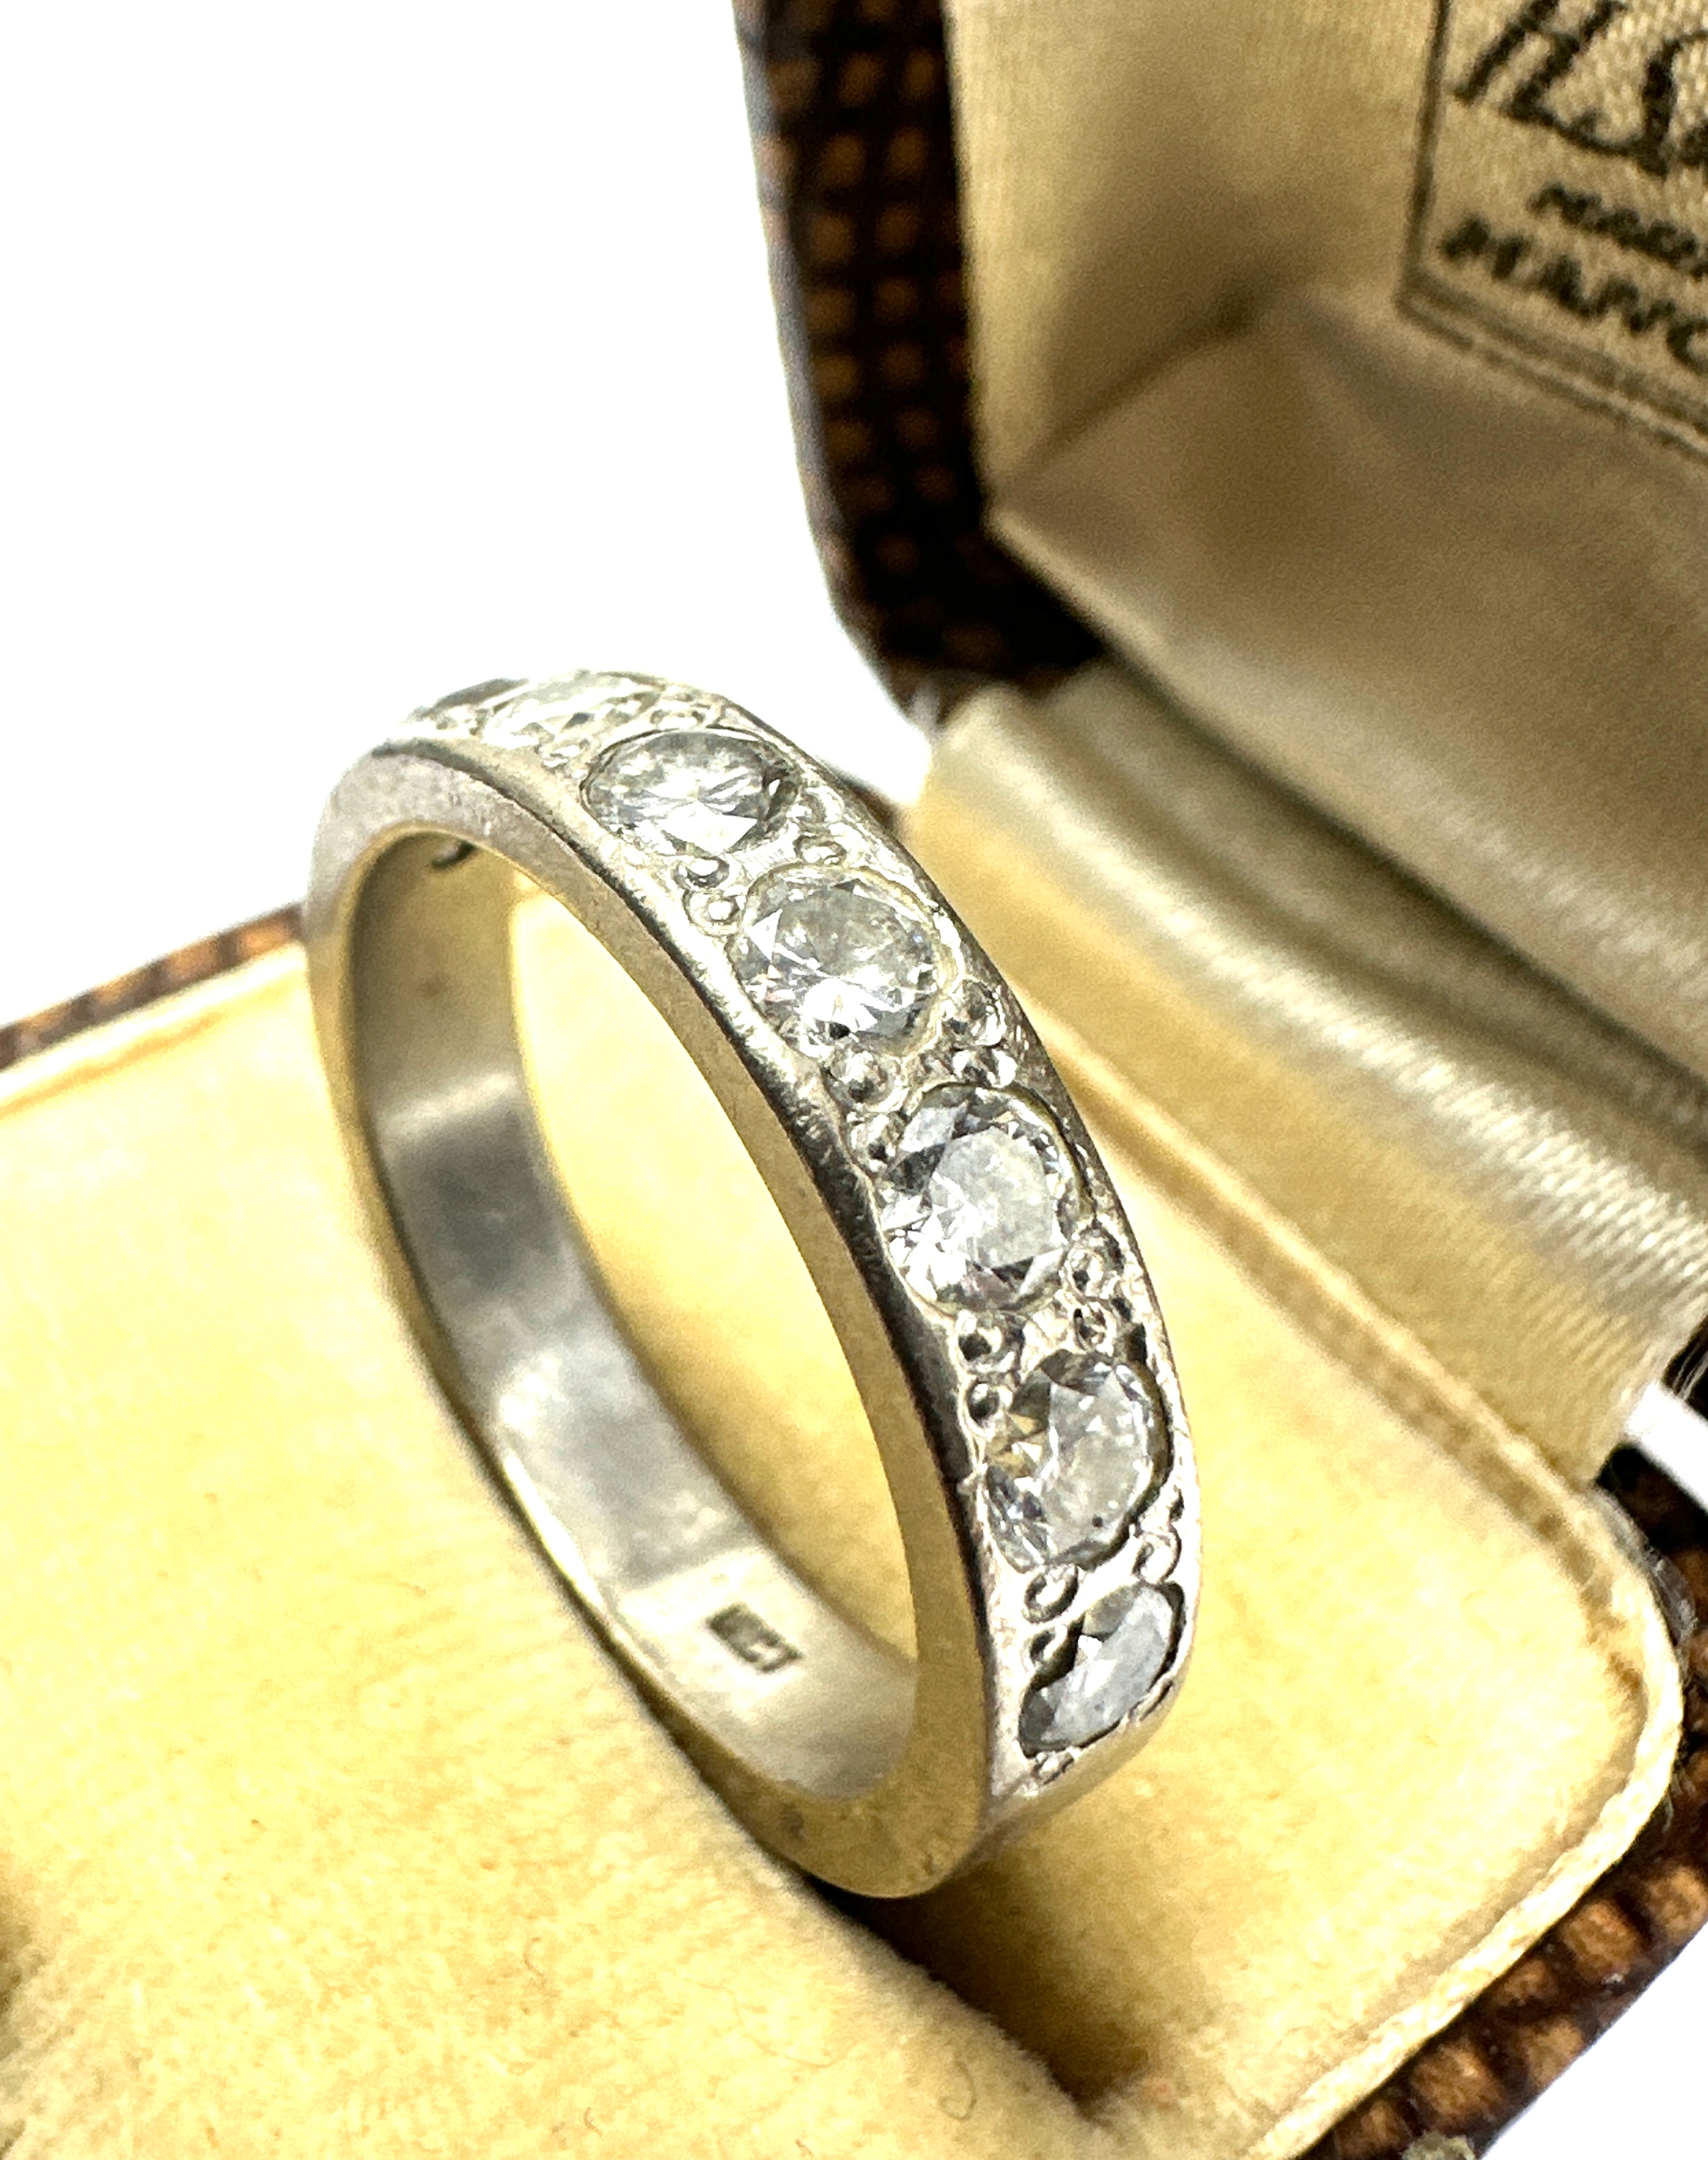 Fine 18ct white gold diamond half eternity ring est 1ct diamonds weight 8g boxed - Image 3 of 4